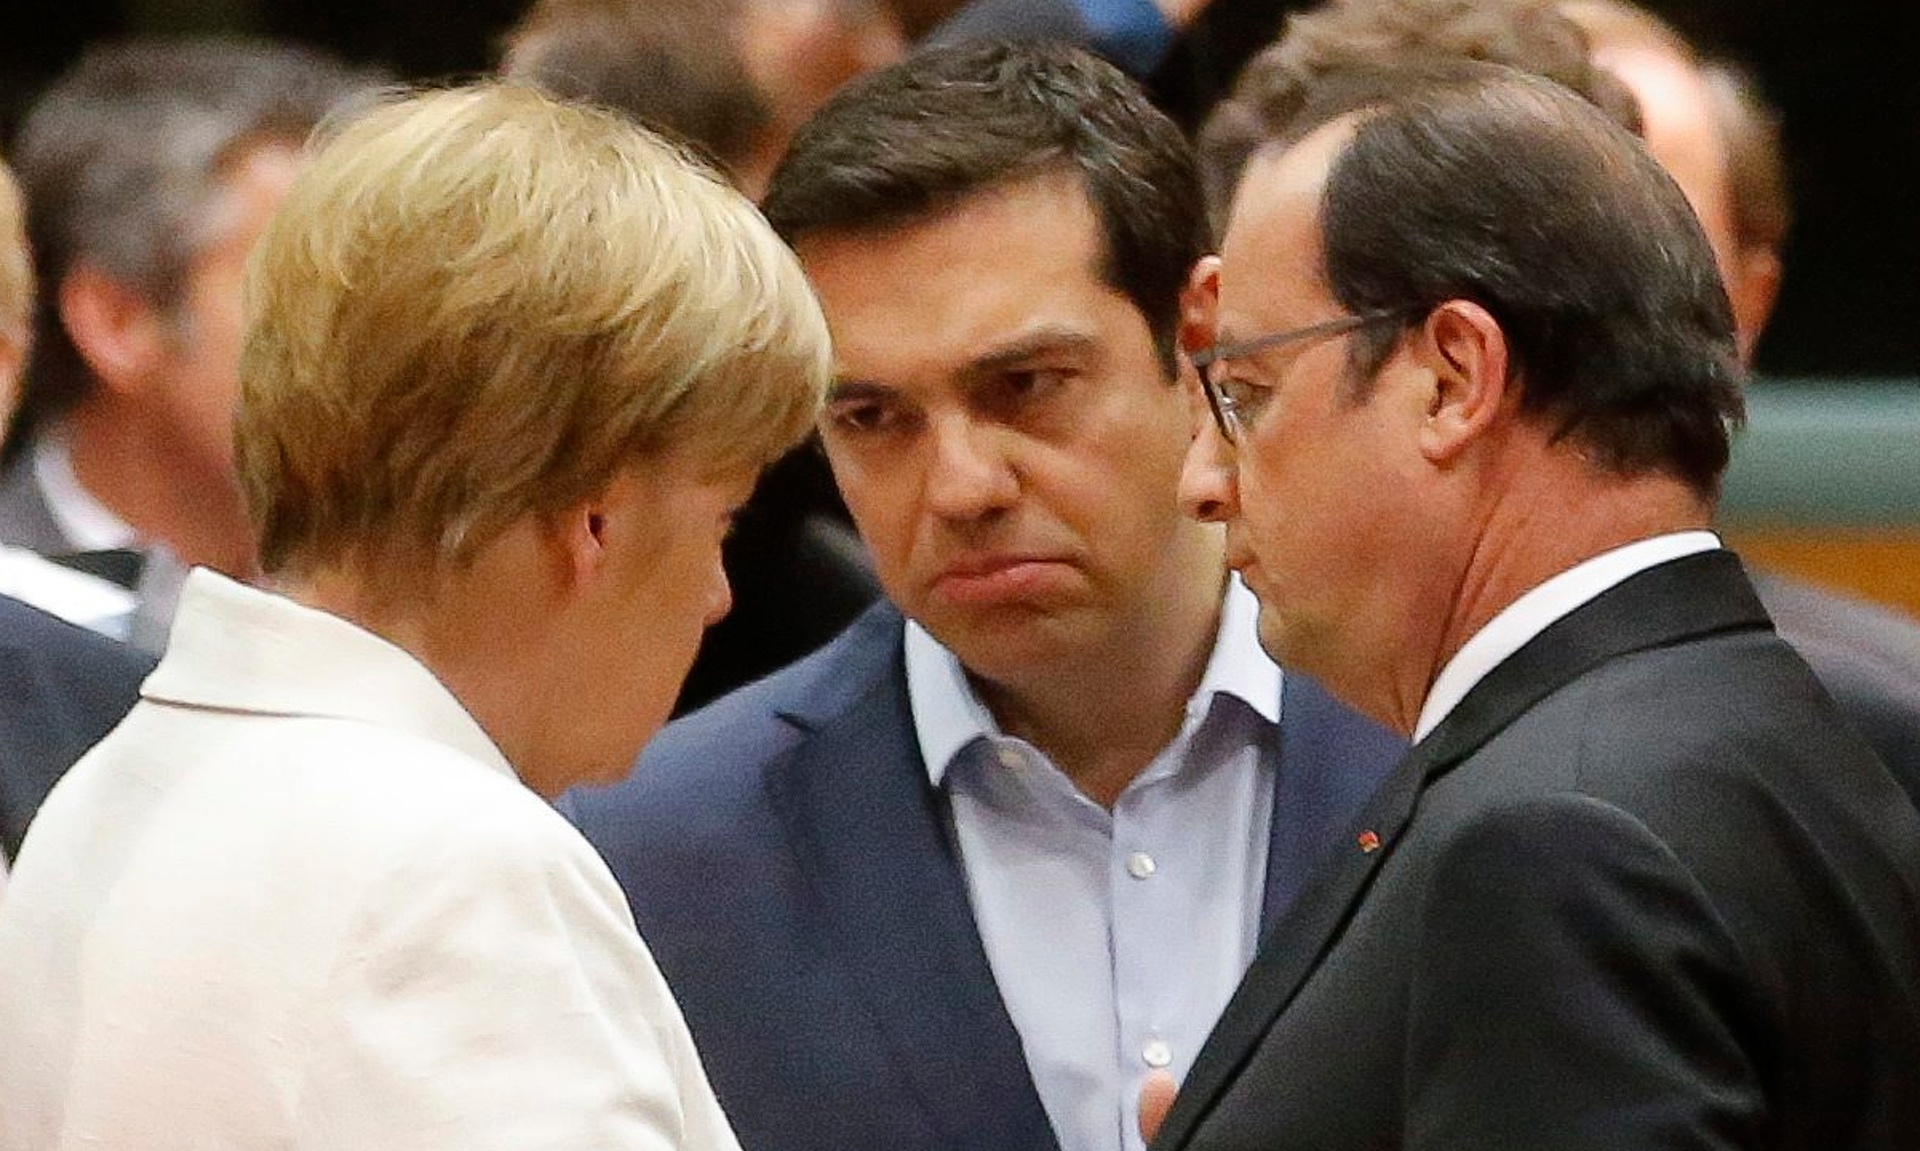 Европа распродаје грчку имовину у вредности од 50 милијарди евра: Ципрас скинуо сако и викао “хоћете и ово да узмете”